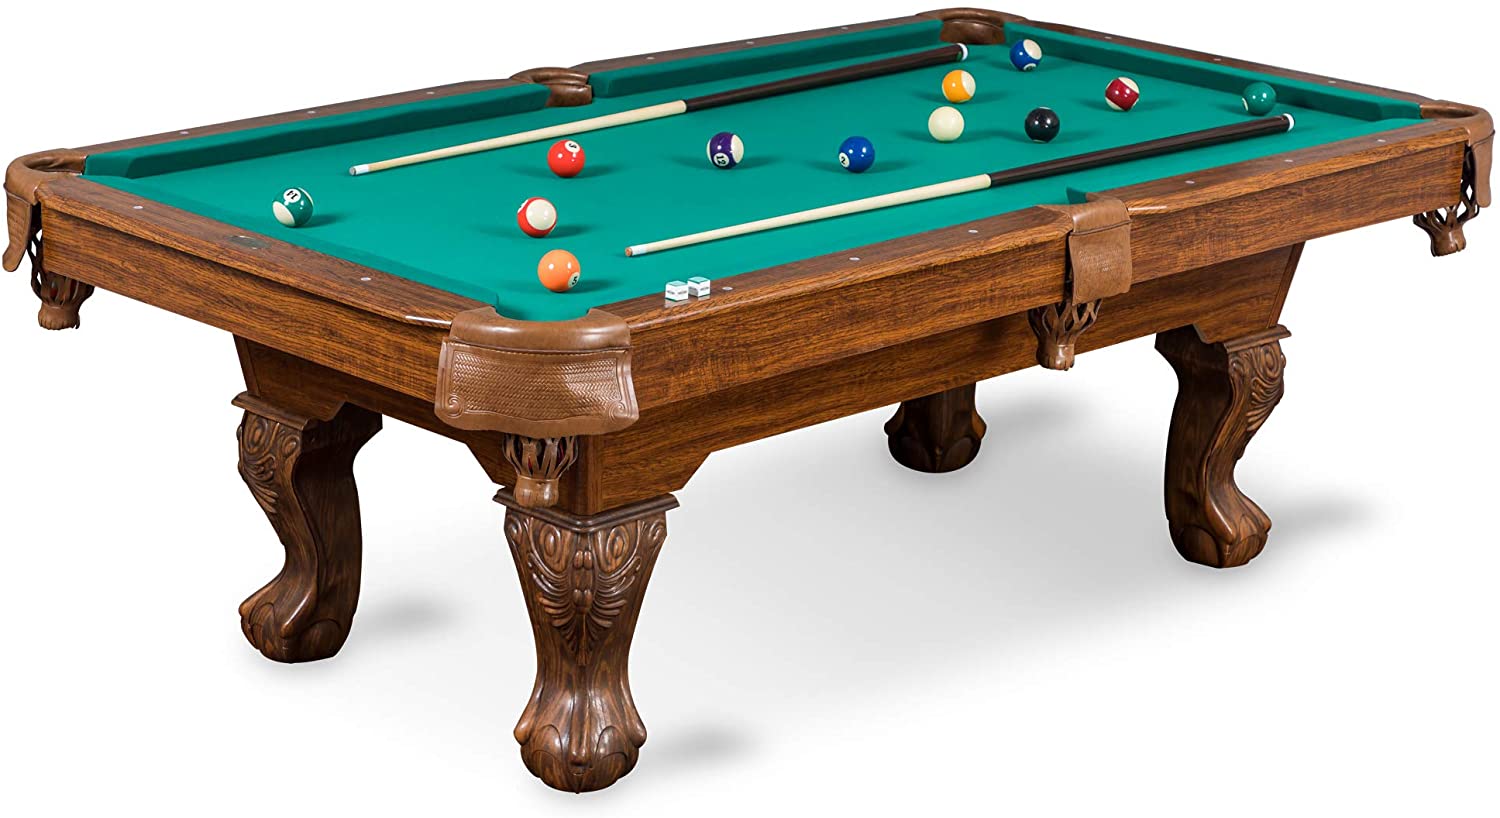 Mini Billiards Table Use and Benefits